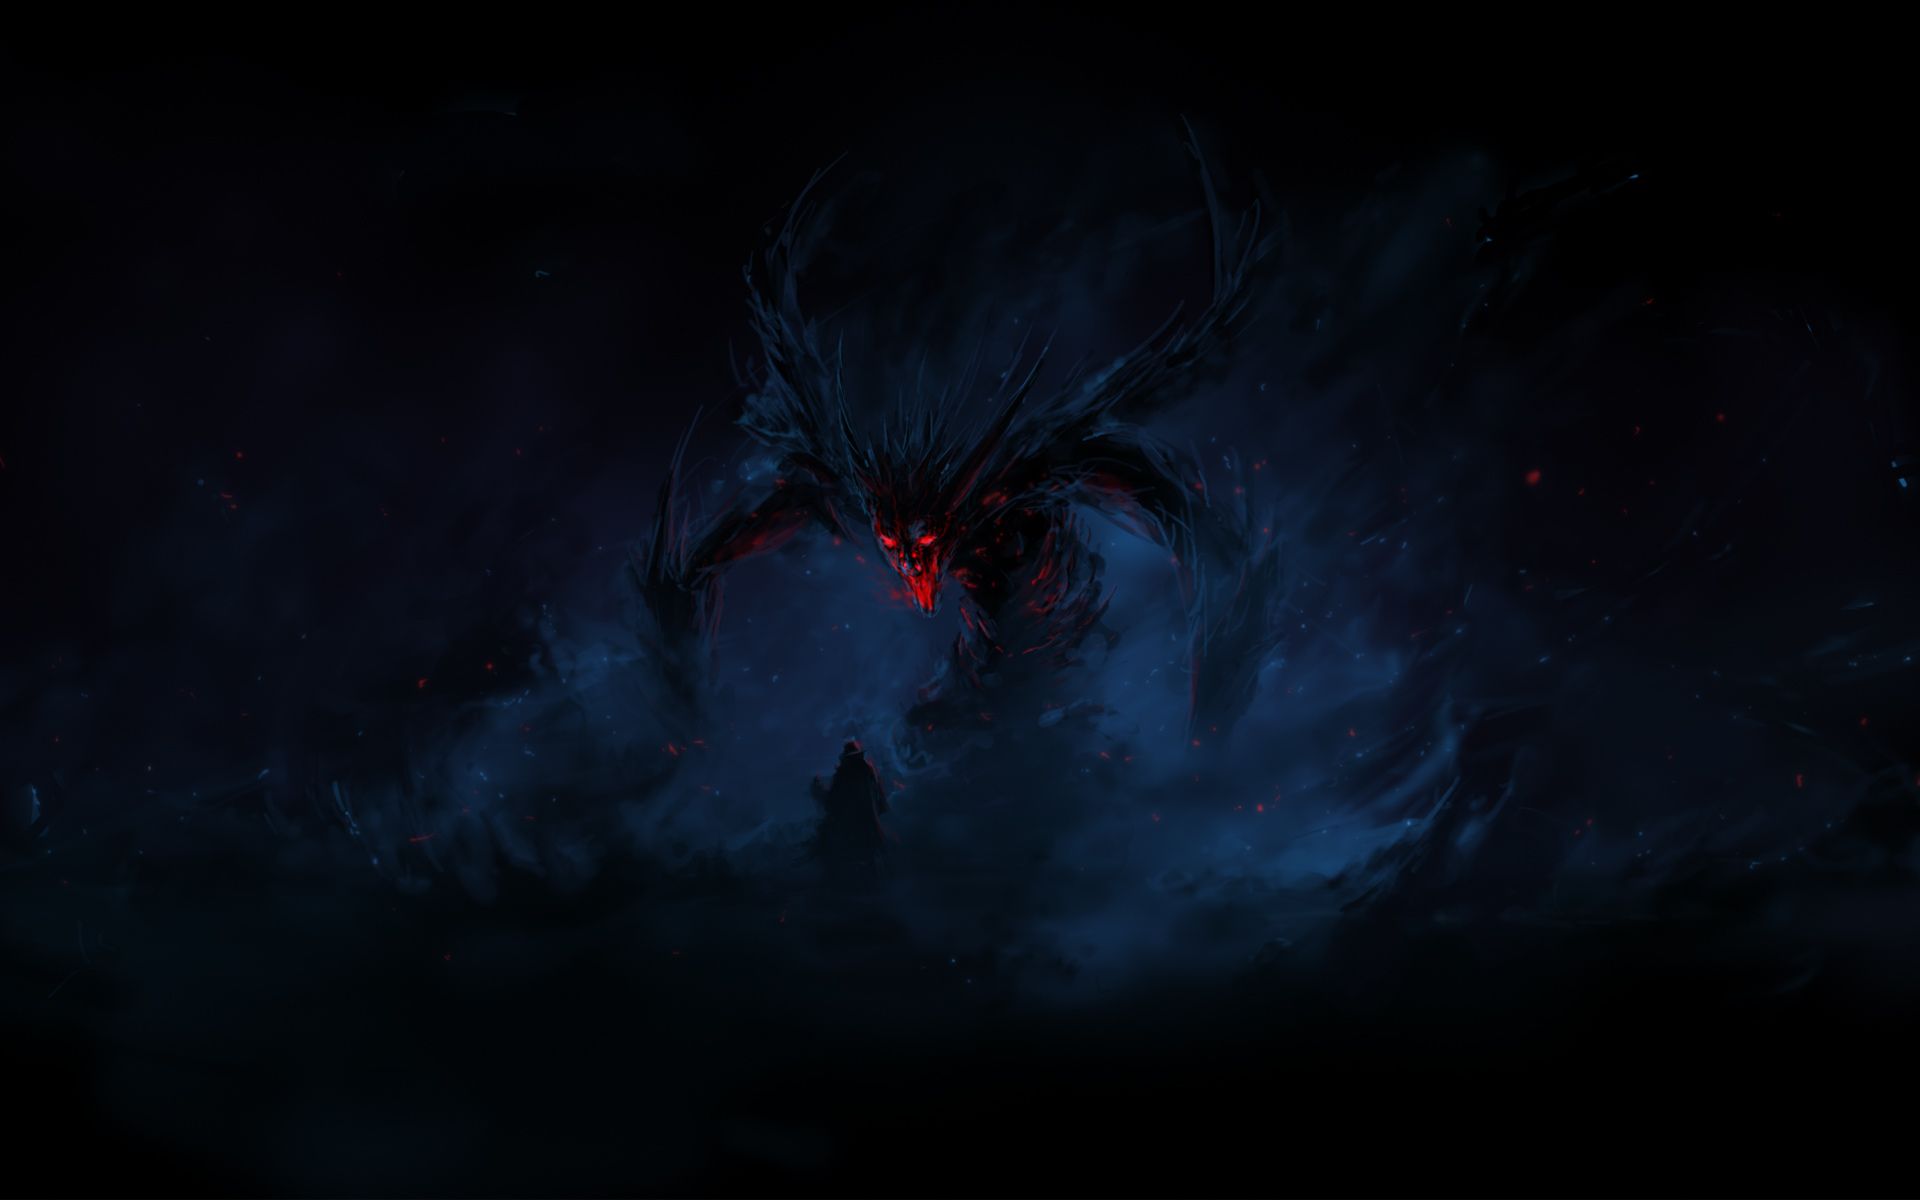 Dark Demon Dark Black Monster Wallpaper. Cartoon wallpaper hd, Dark creatures, Scary dreams